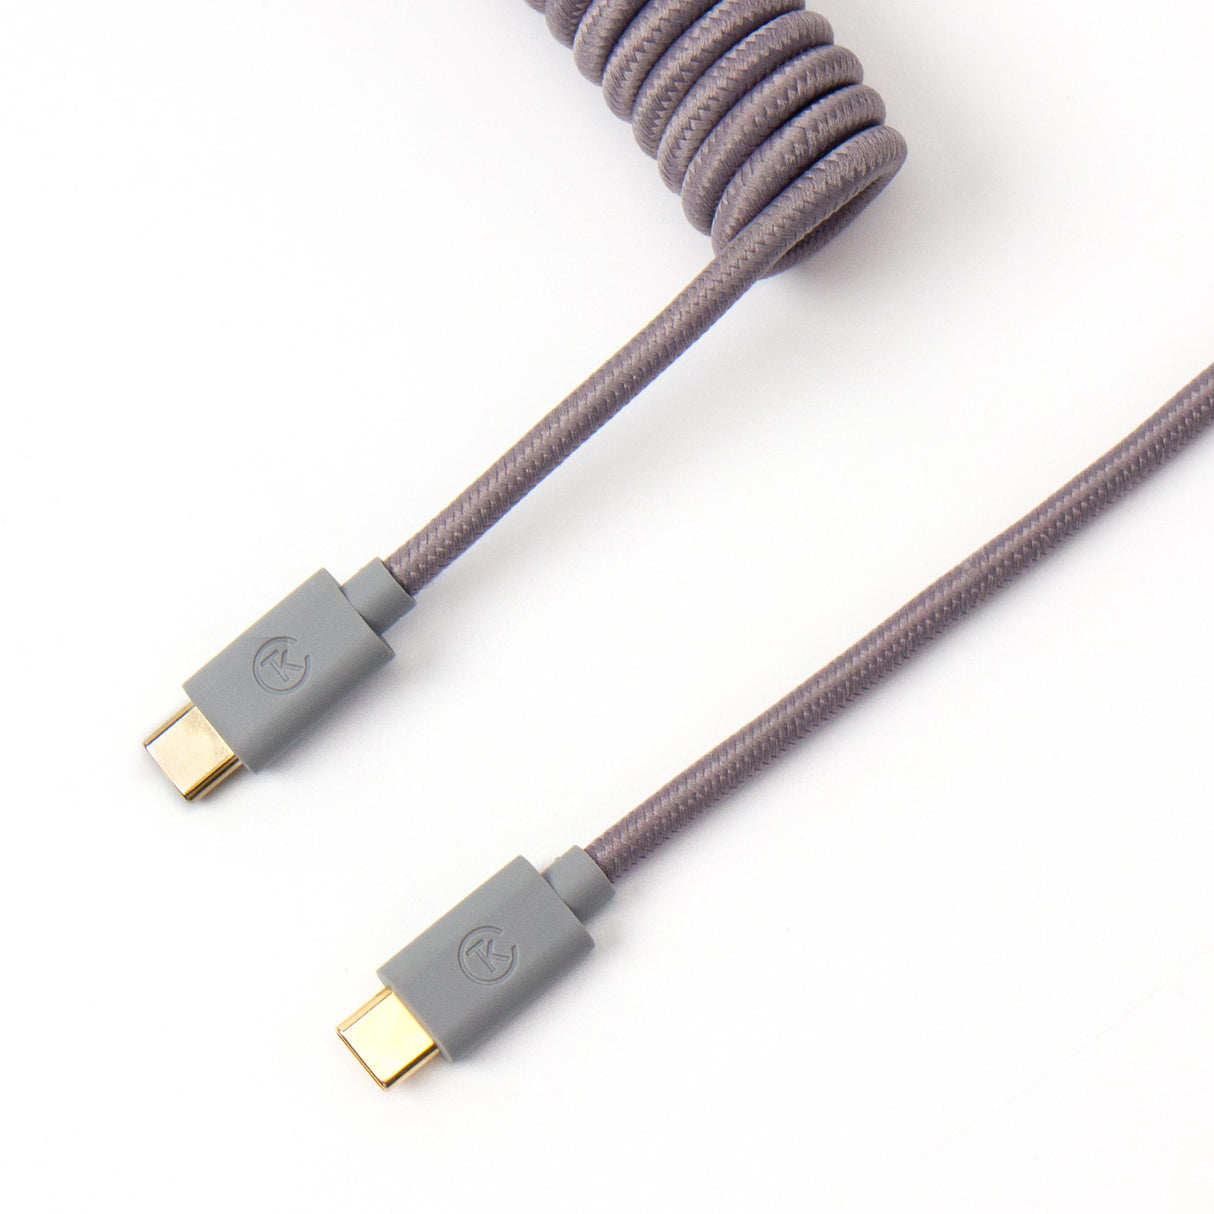 Keychron custom coiled aviator USB type-C cable grey color